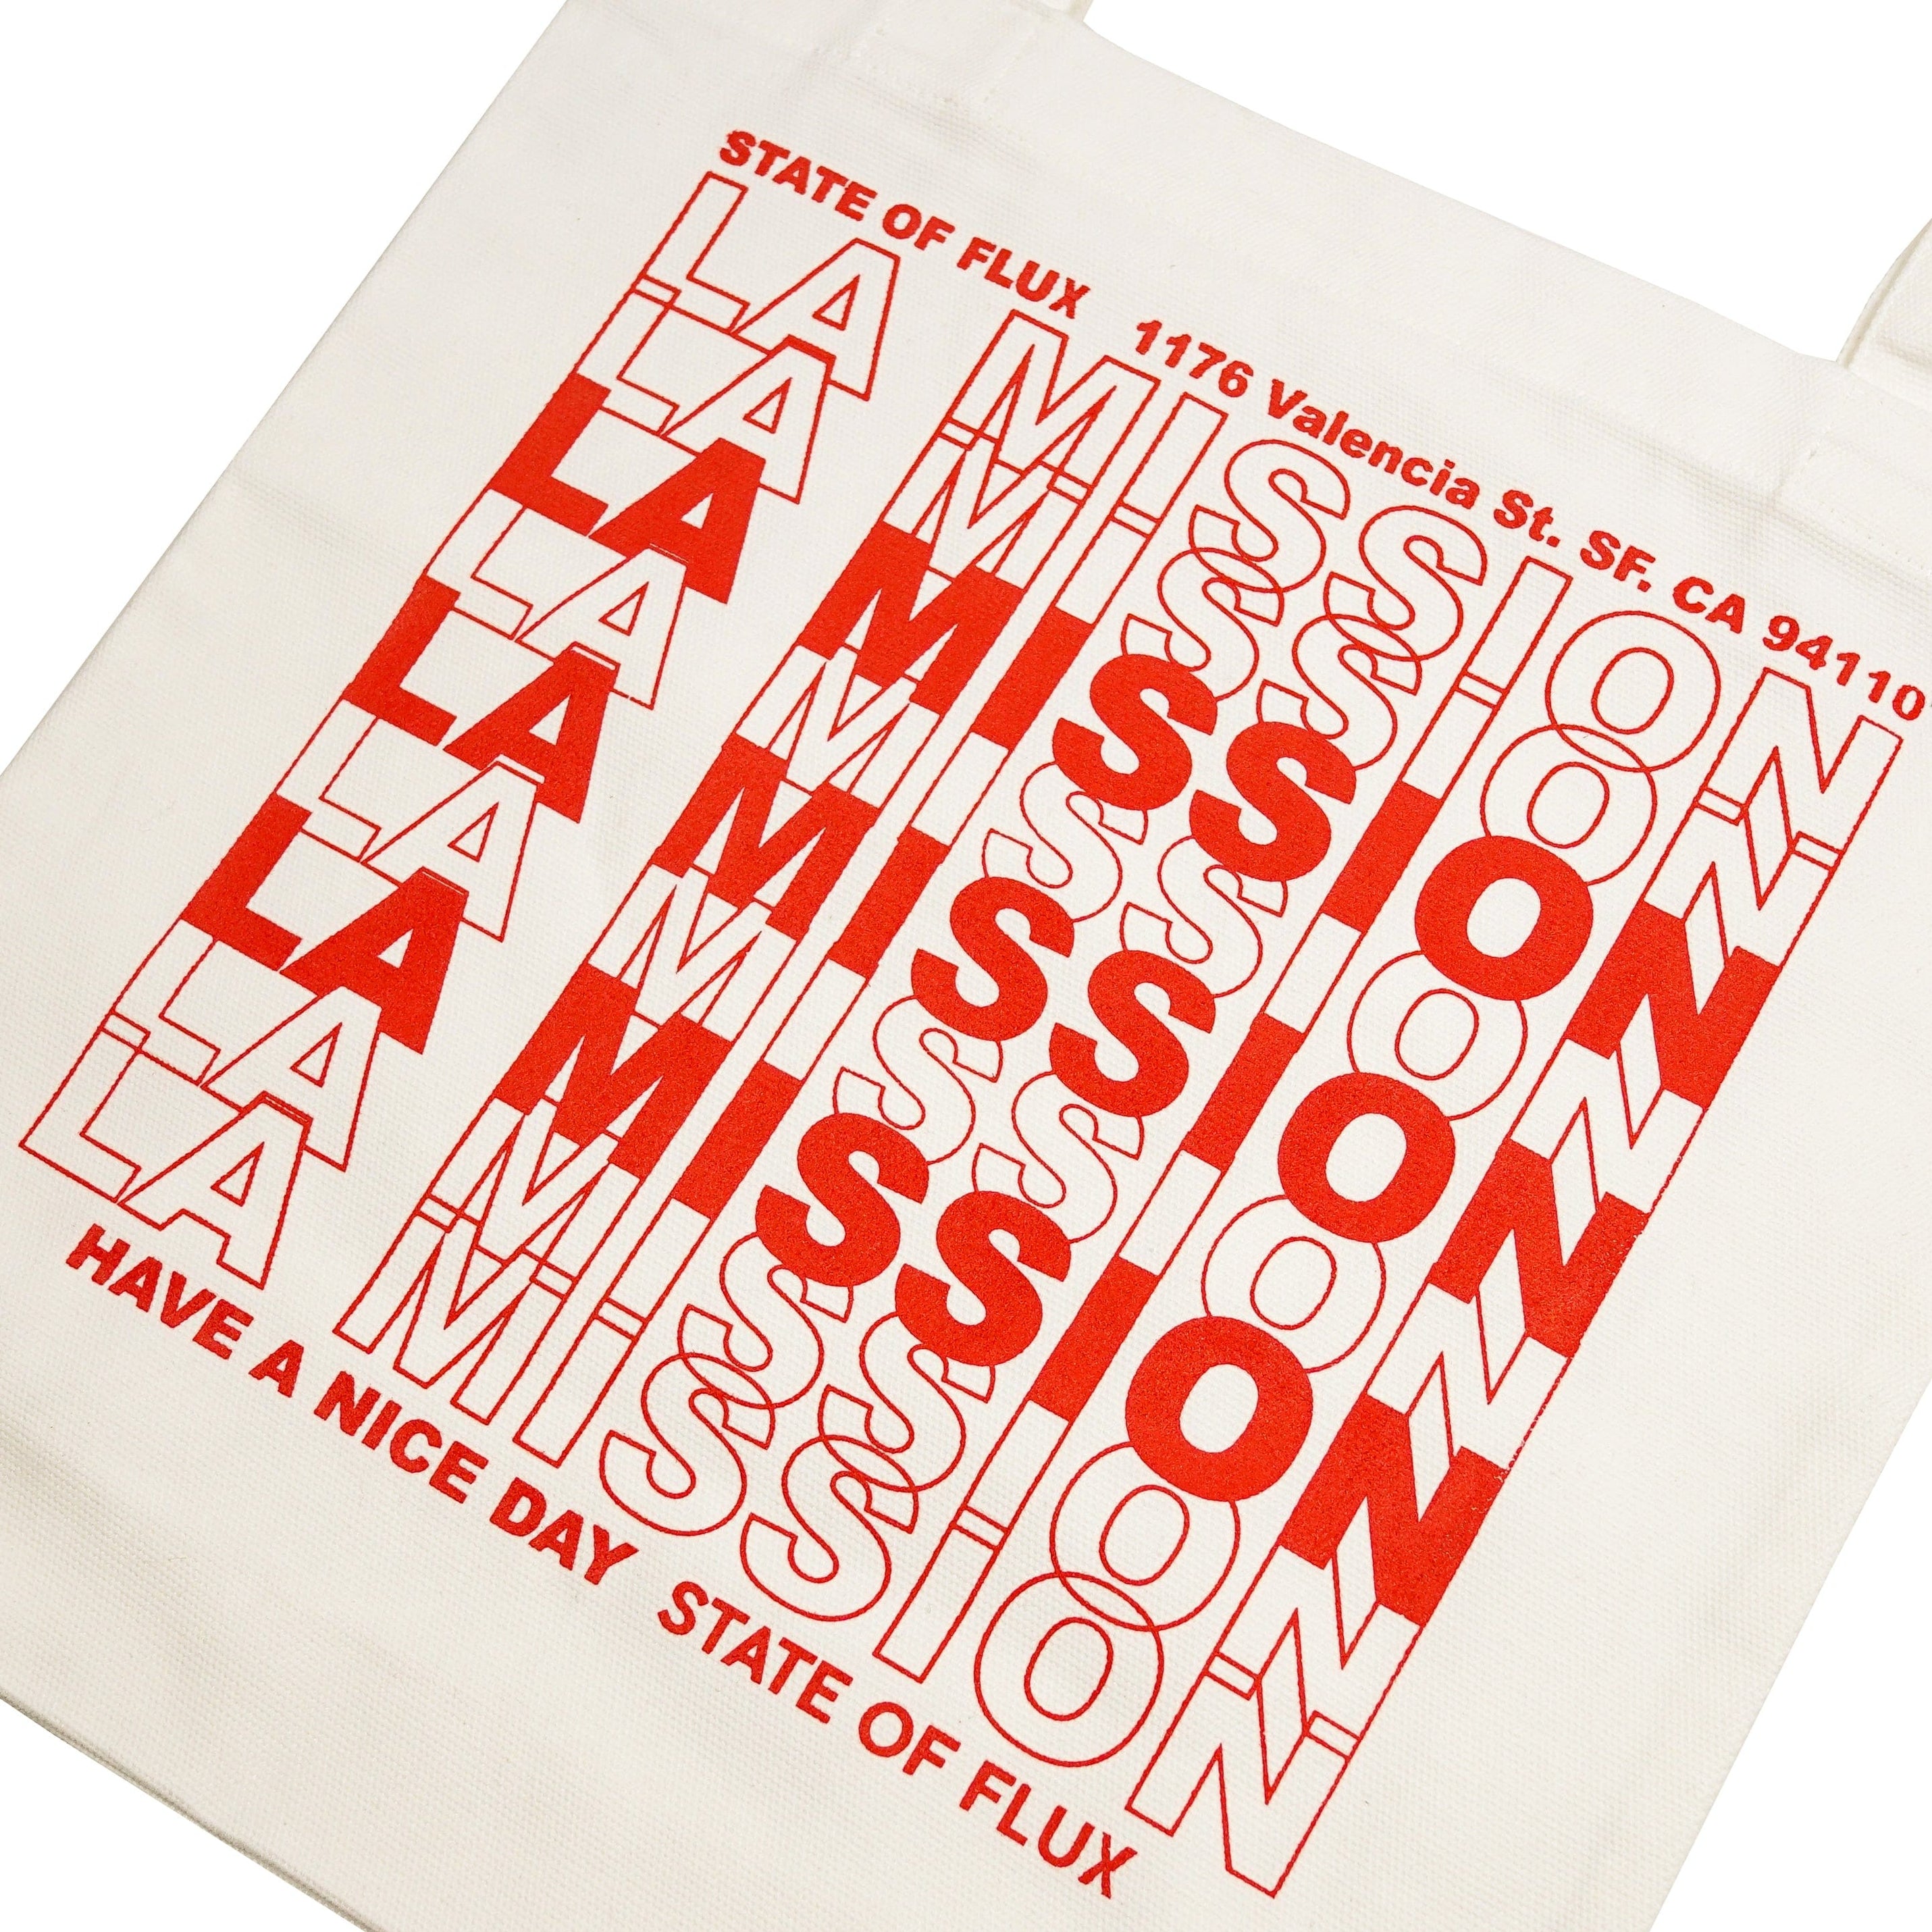 La Mission Tote Bag in cream and red